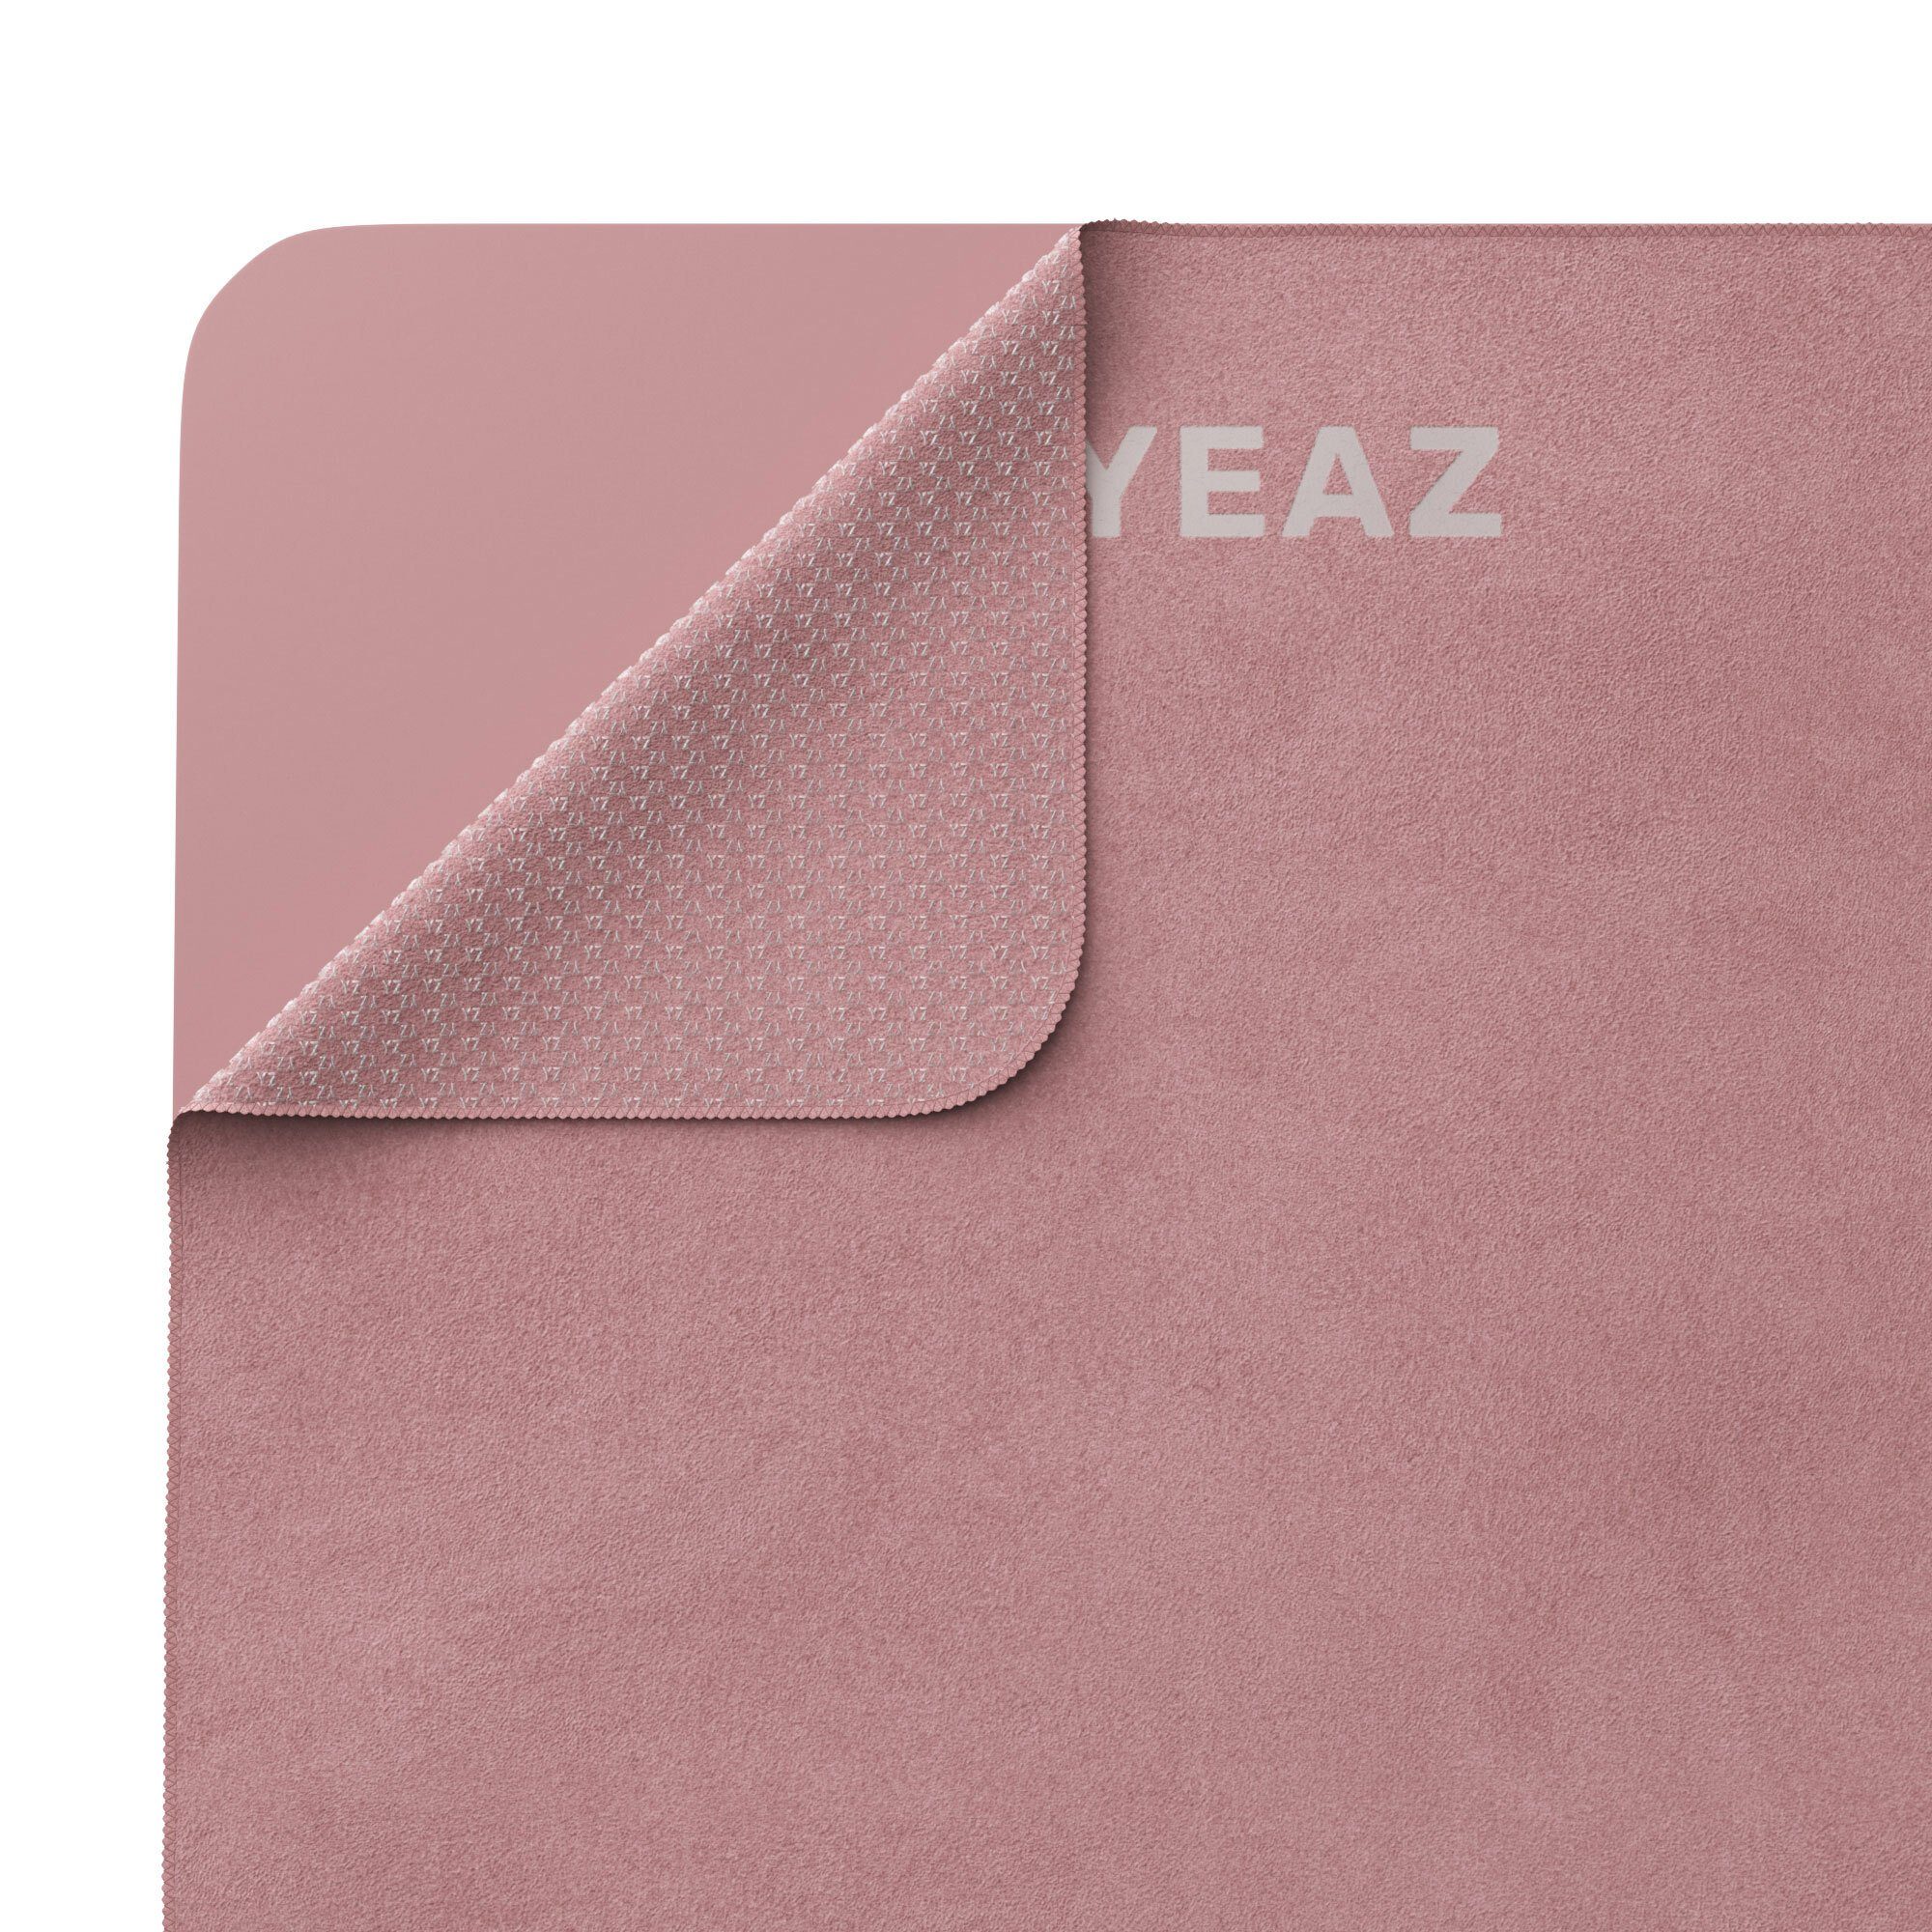 YEAZ Yogamatte CARESS set - handtuch & matte pink